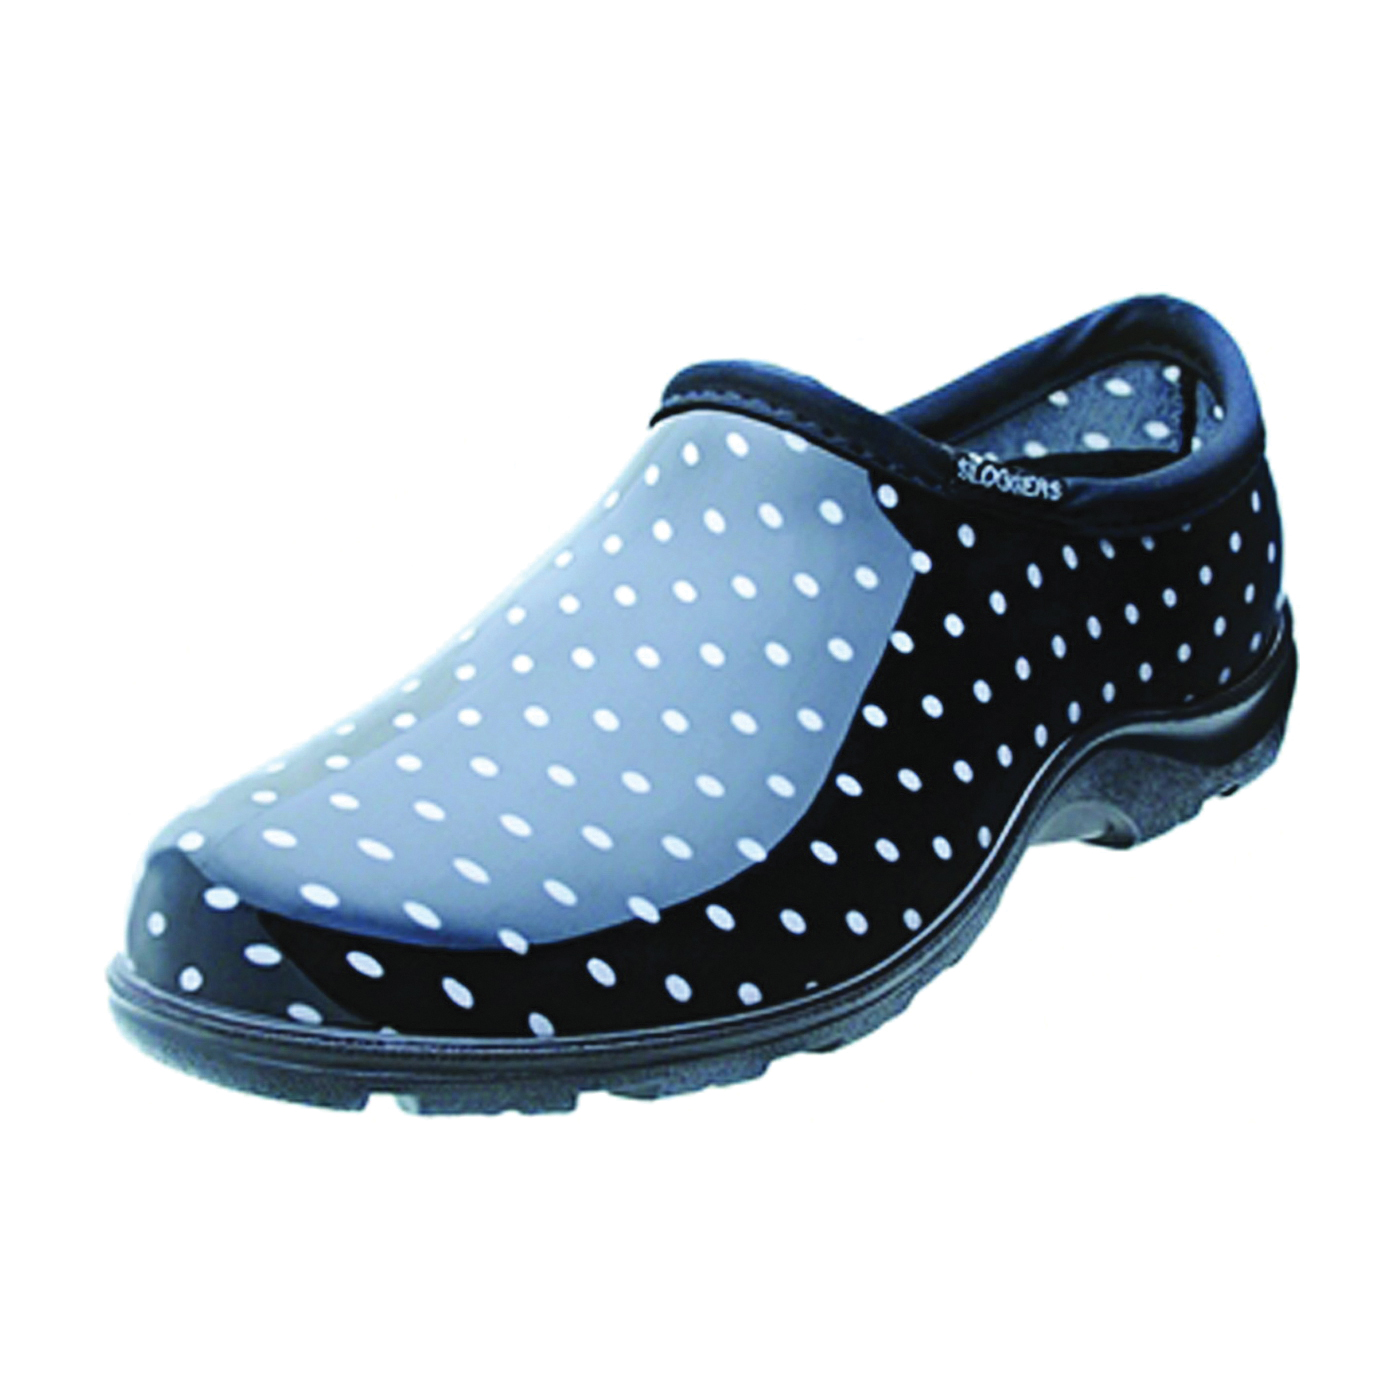 5113BP-10 Comfort Rain Shoes, 10 in, Black/White, Plastic Upper